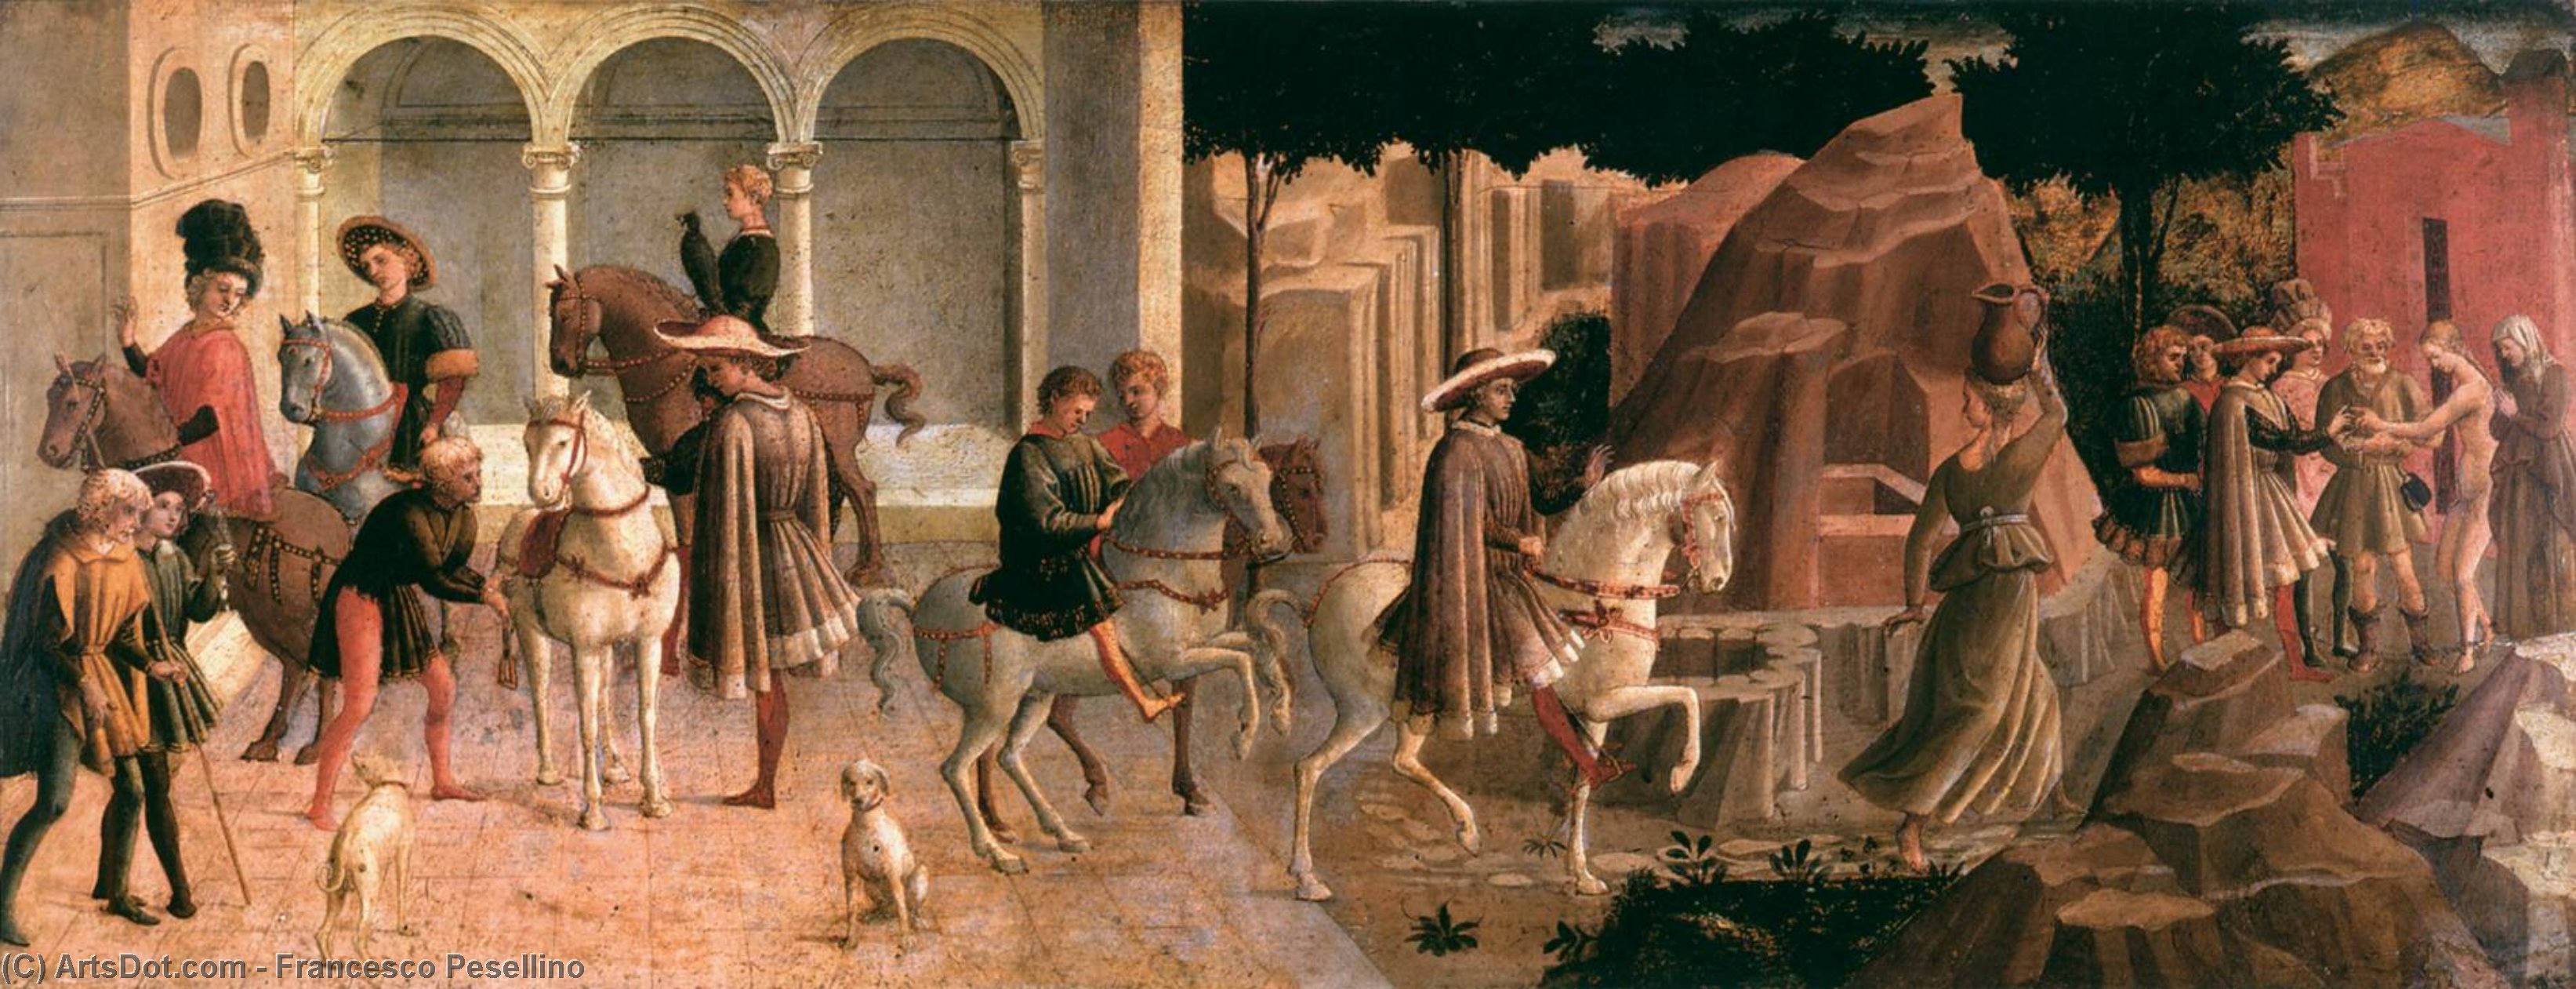 Order Artwork Replica Episode from the Story of Griselda, 1445 by Francesco Di Stefano Pesellino (1422-1457) | ArtsDot.com